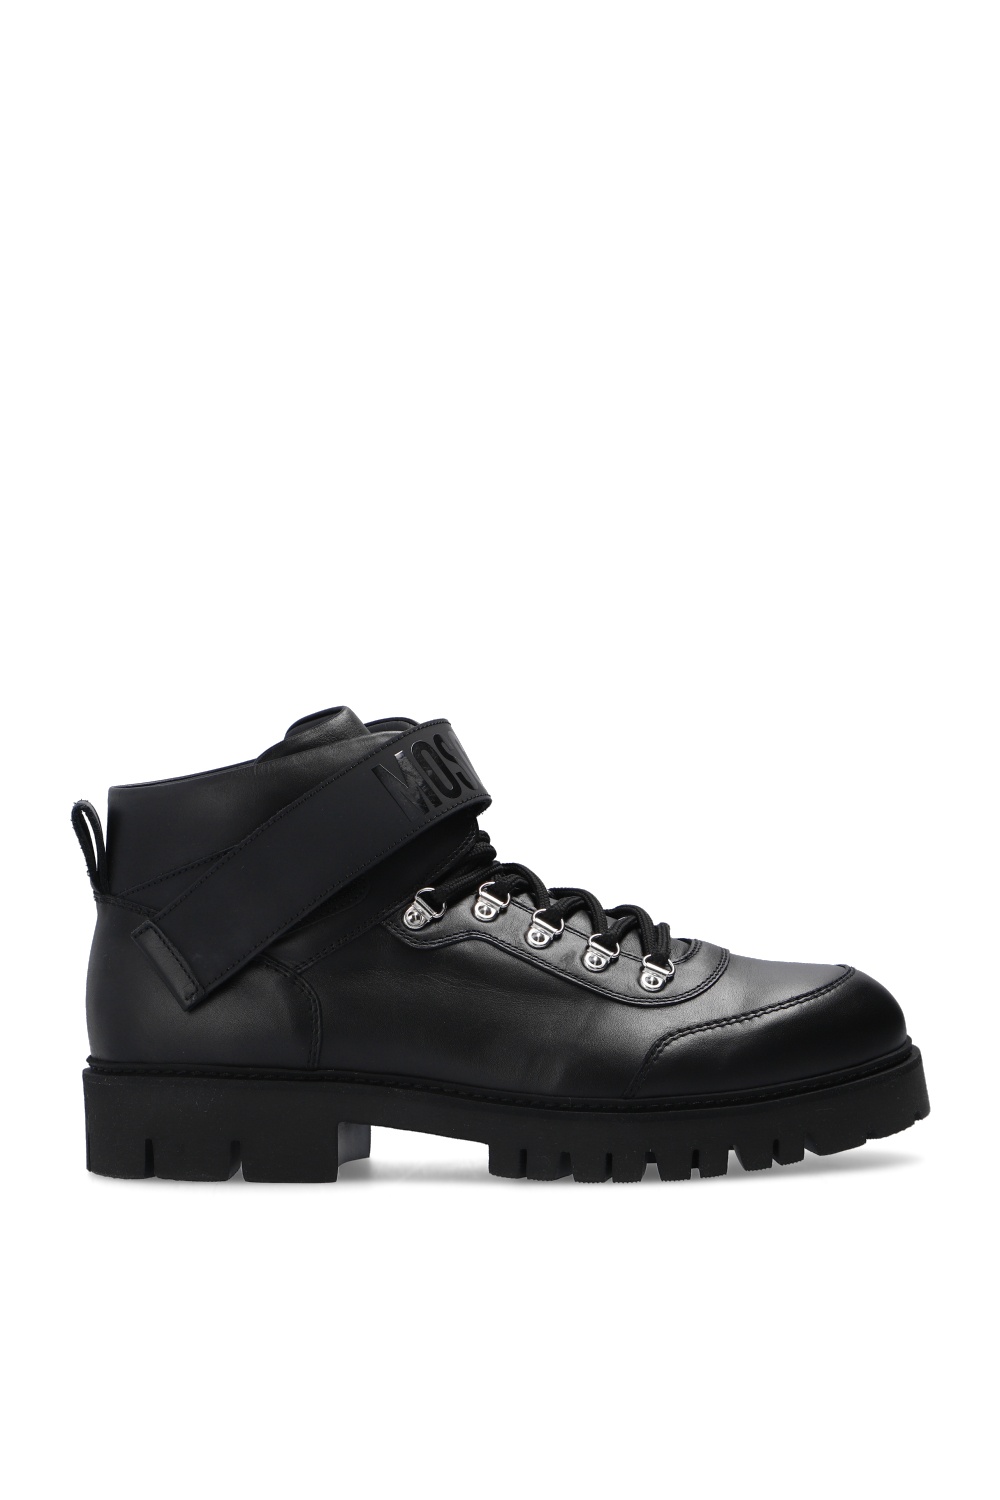 Moschino Logo-printed boots | Men's Shoes | Vitkac